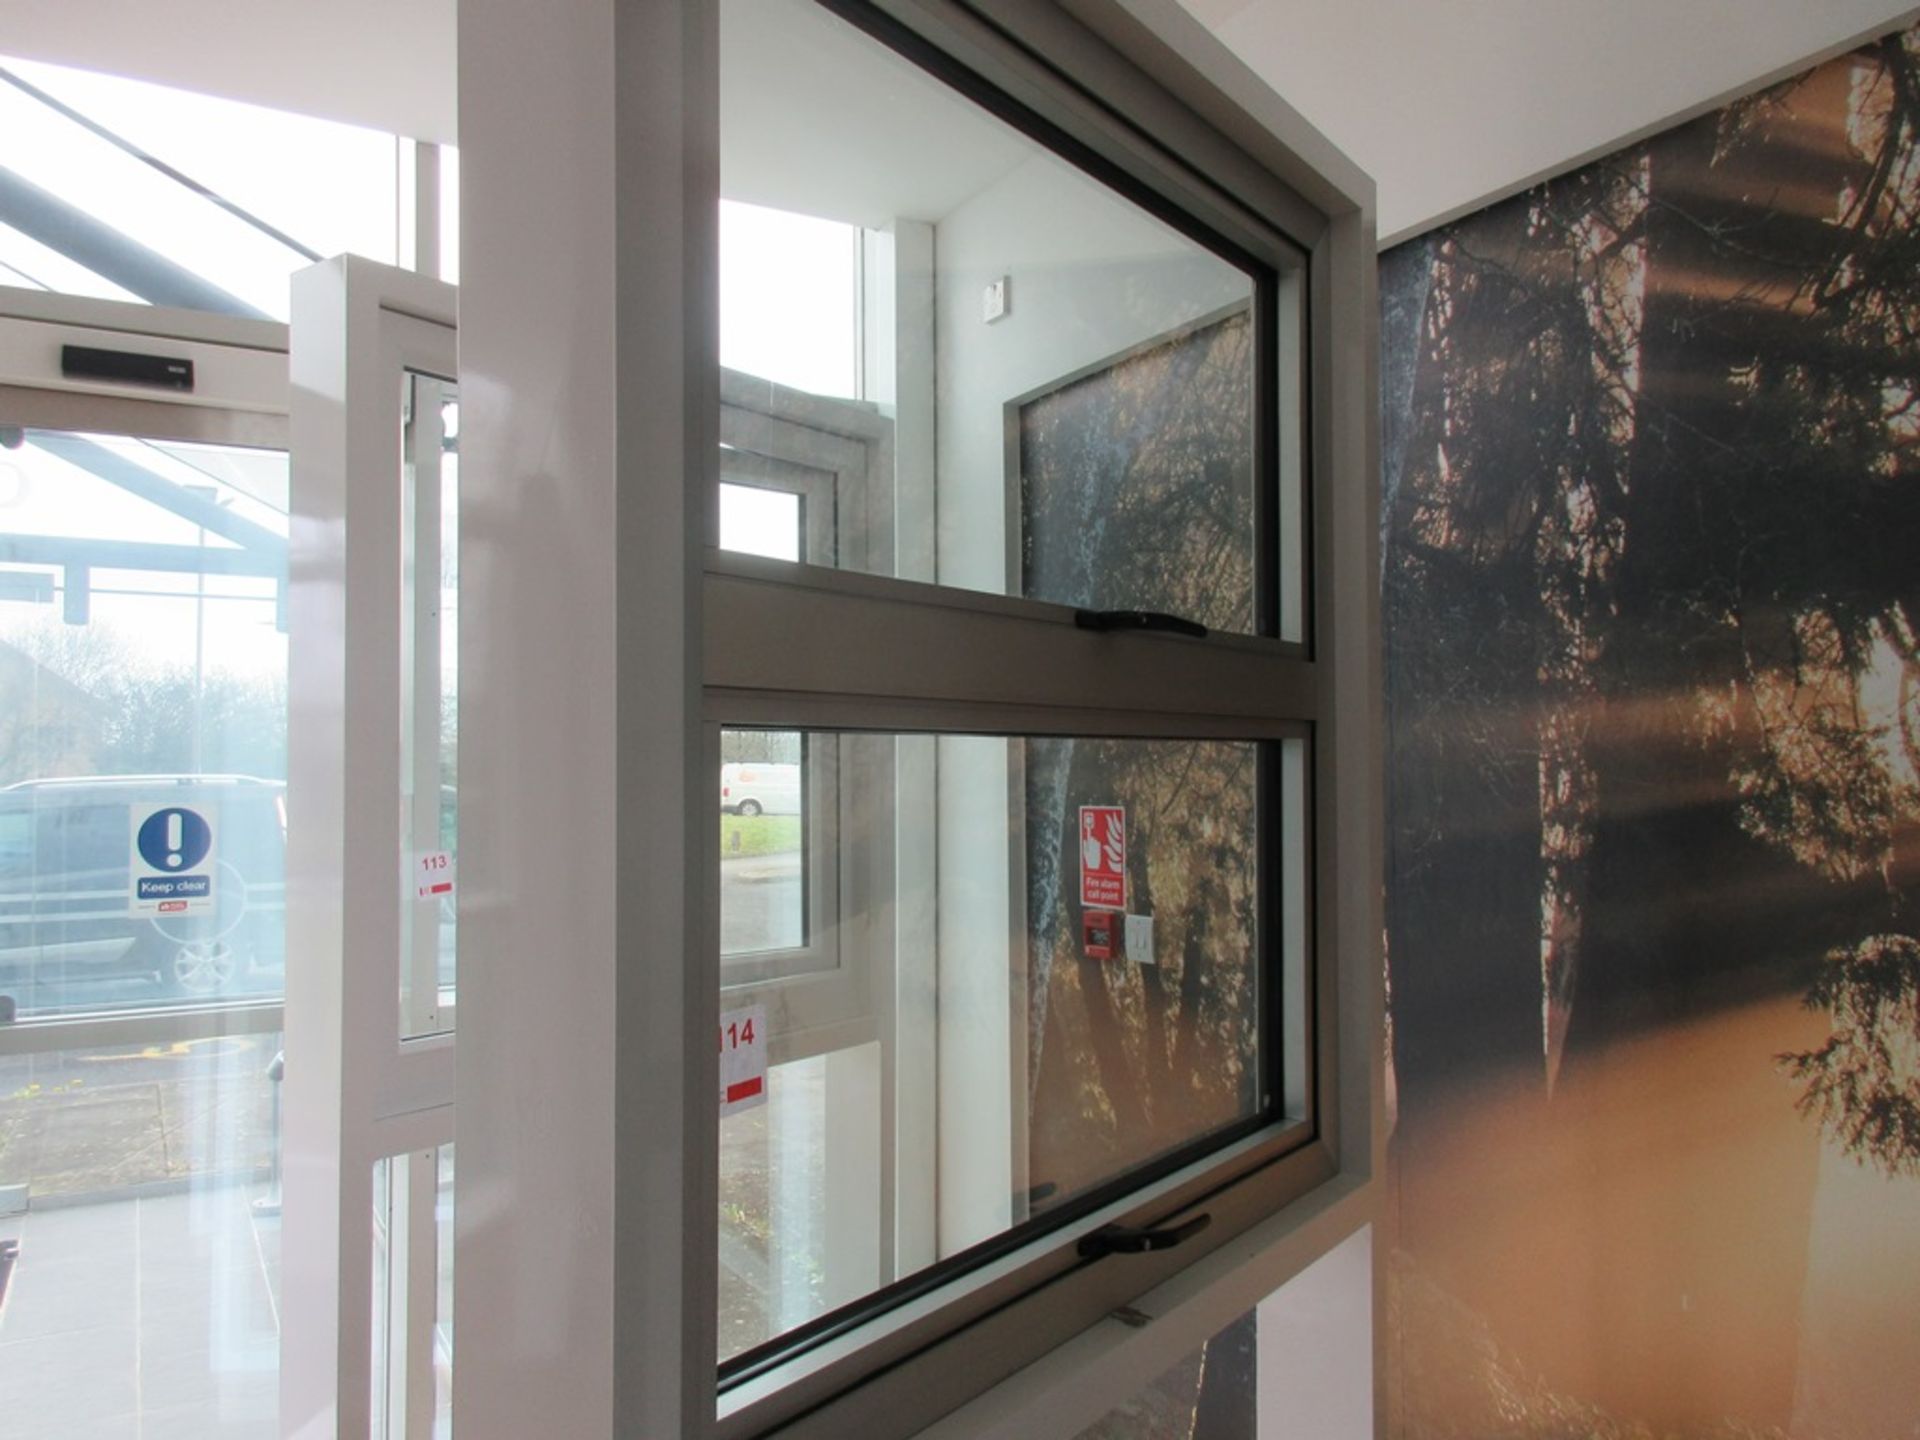 Aluminium framed twin push out door showroom window - Image 2 of 3